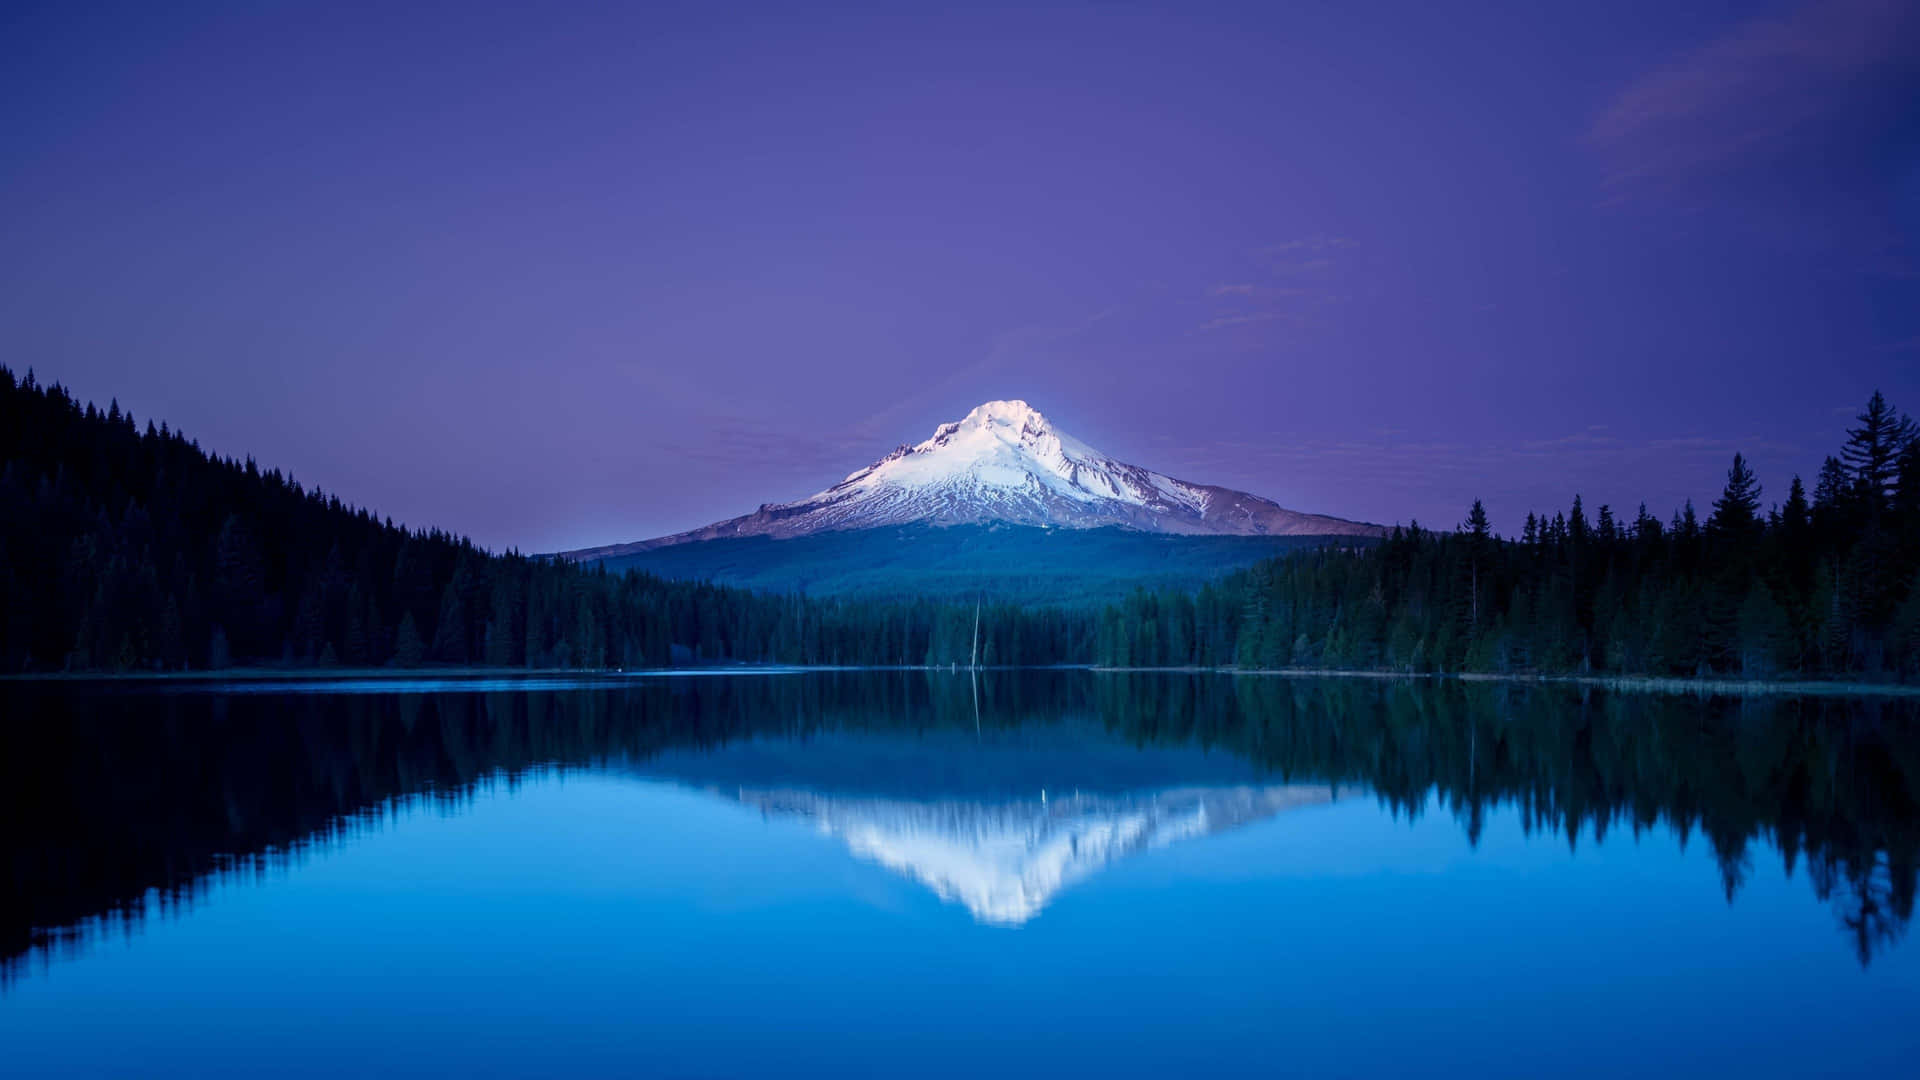 Caption: Majestic Landscape illuminated in 4K Ultra HD Wallpaper